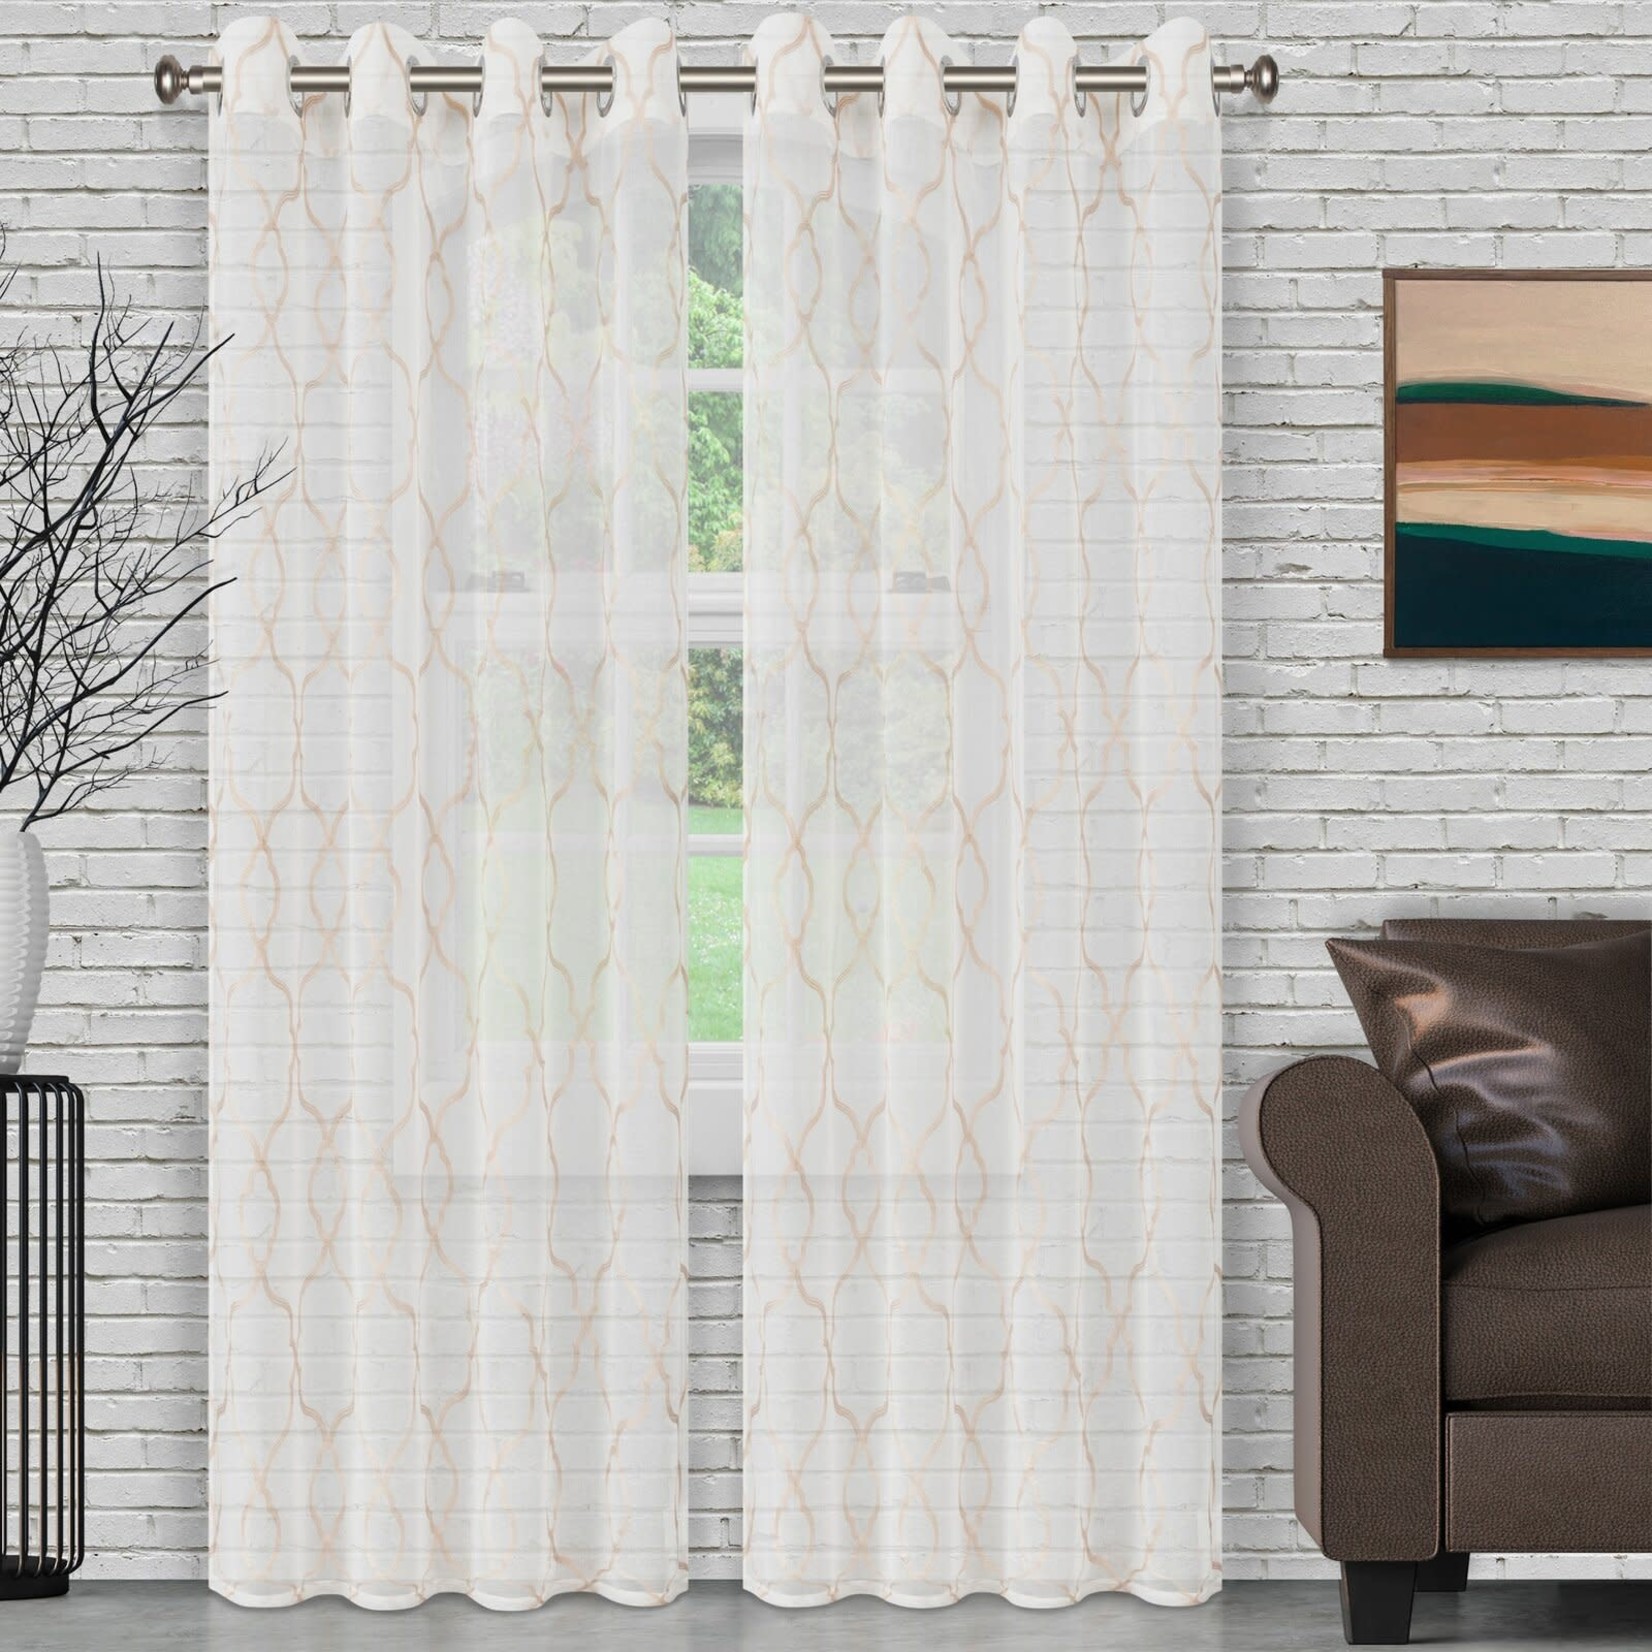 *52" x 84" Junious Geometric Sheer Grommet Curtain Panels - Set of 2